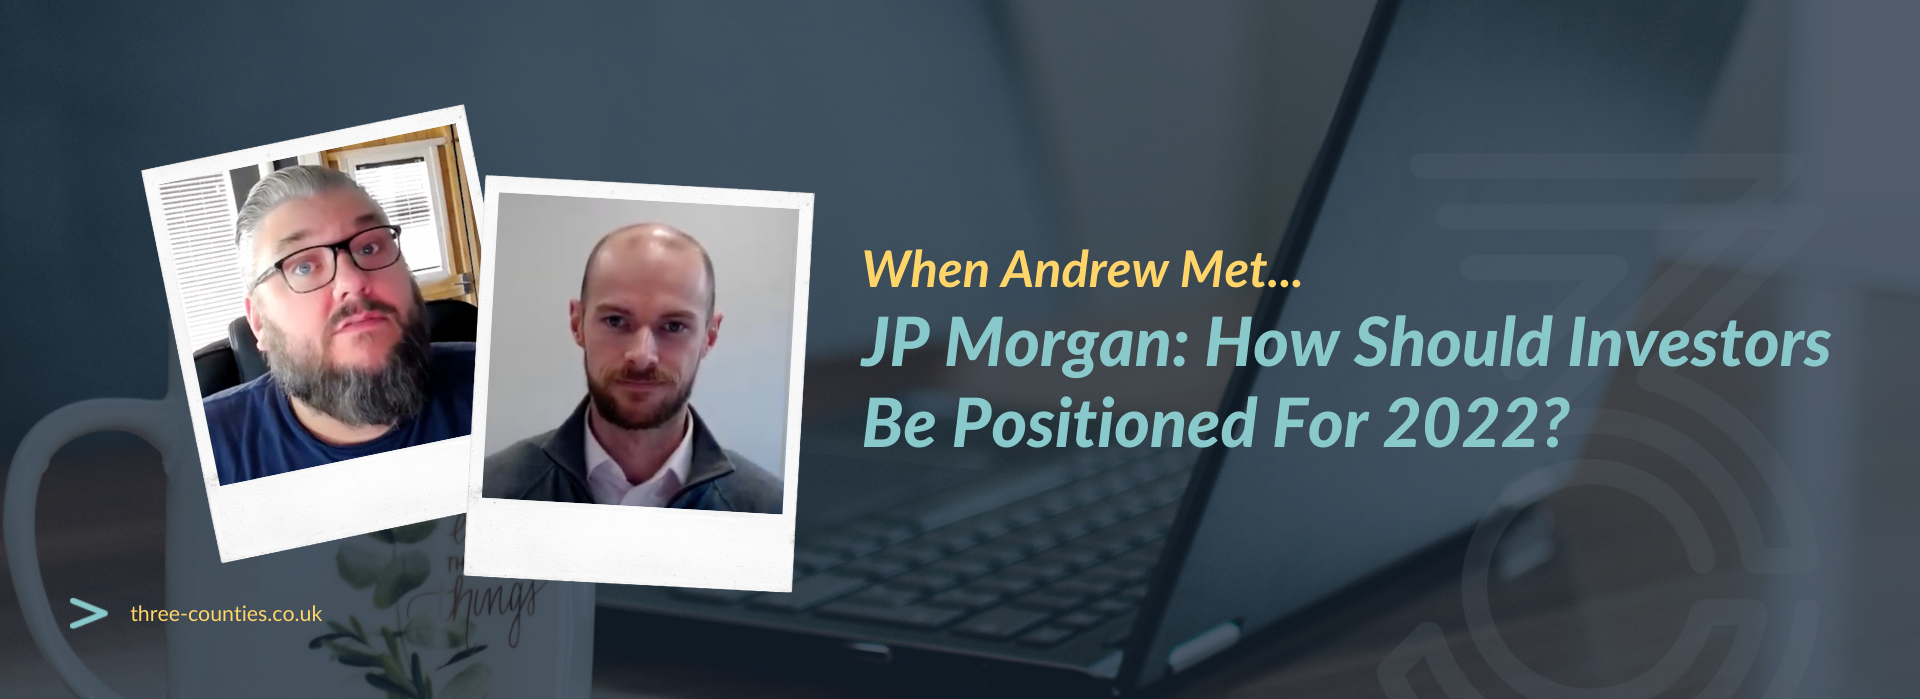 When Andrew Met... JP Morgan: How Should Investors Be Positioned For 2022?